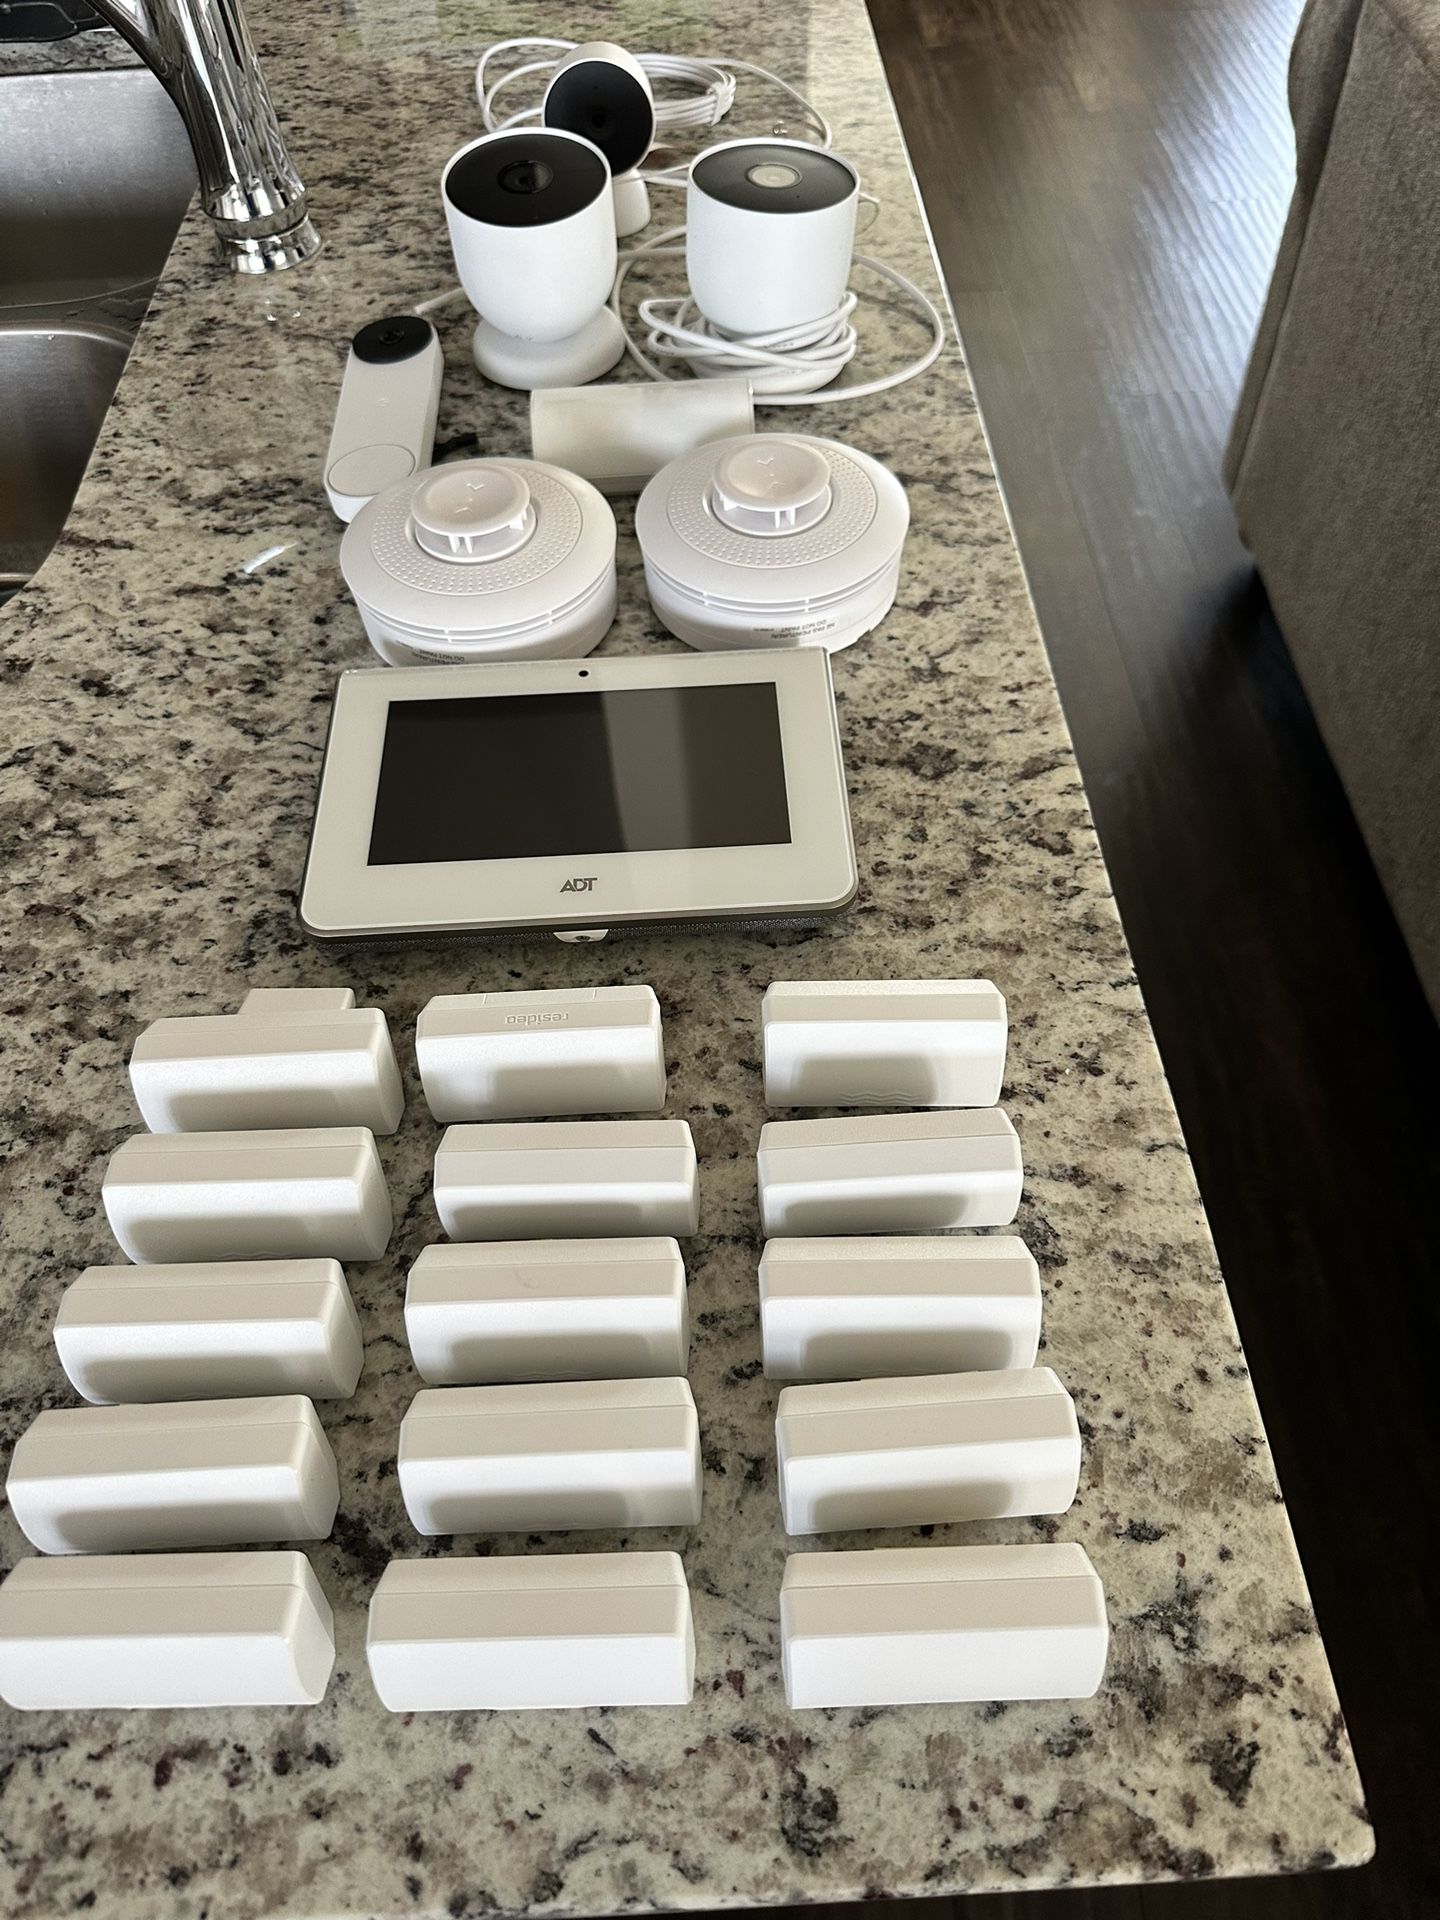 Google Nest Complete Home Alarm System